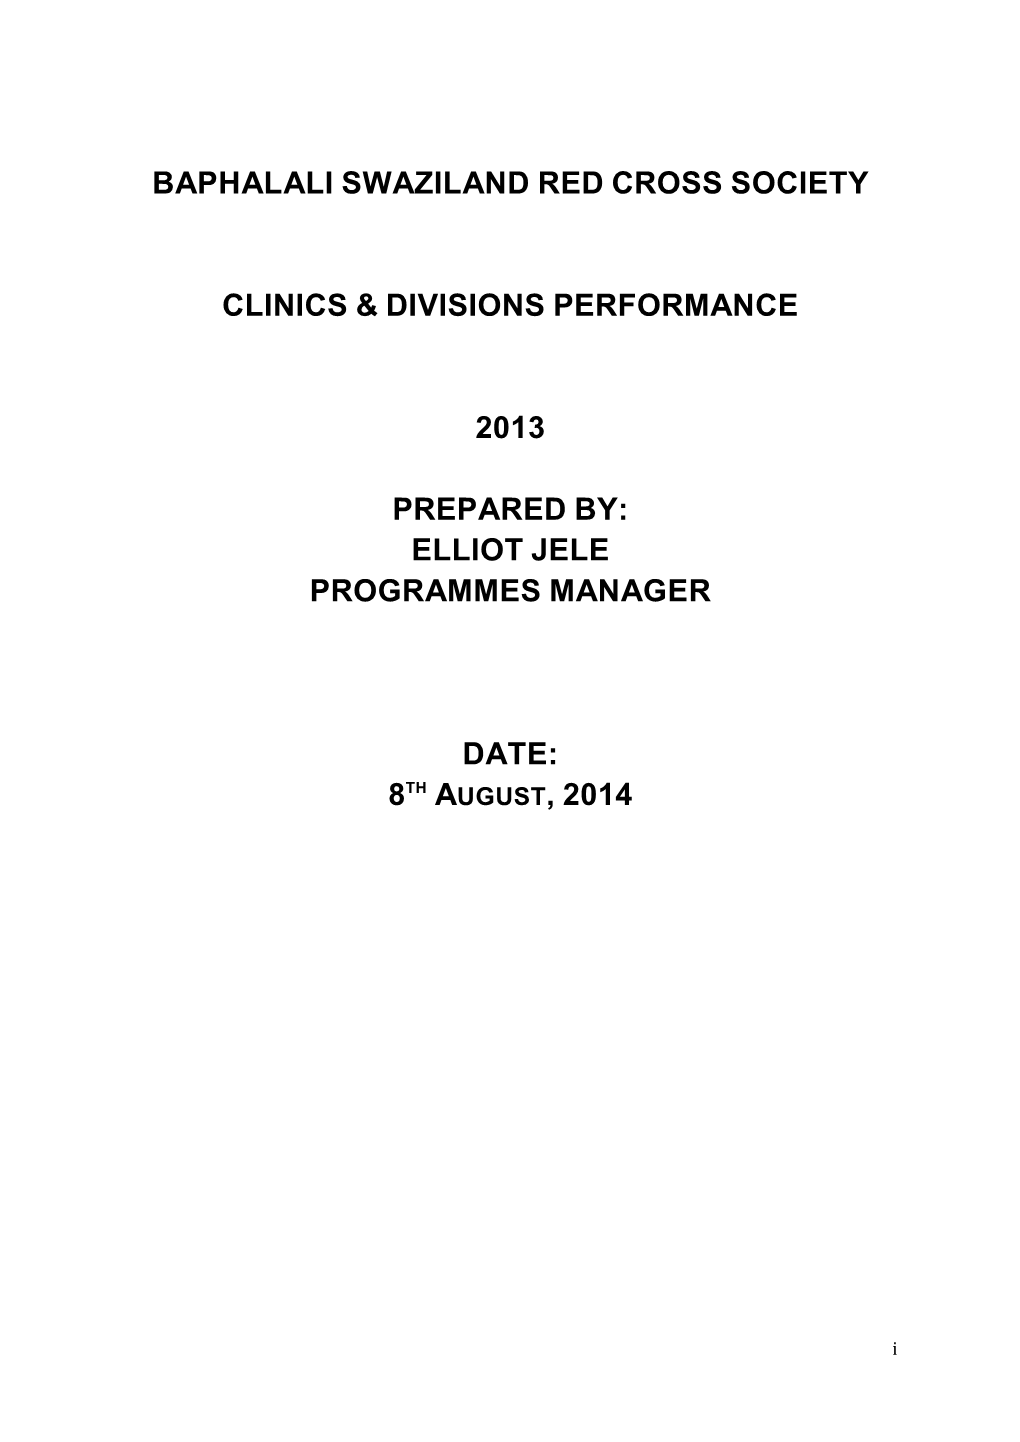 Baphalali Swaziland Red Cross Society Clinics & Divisions Performance